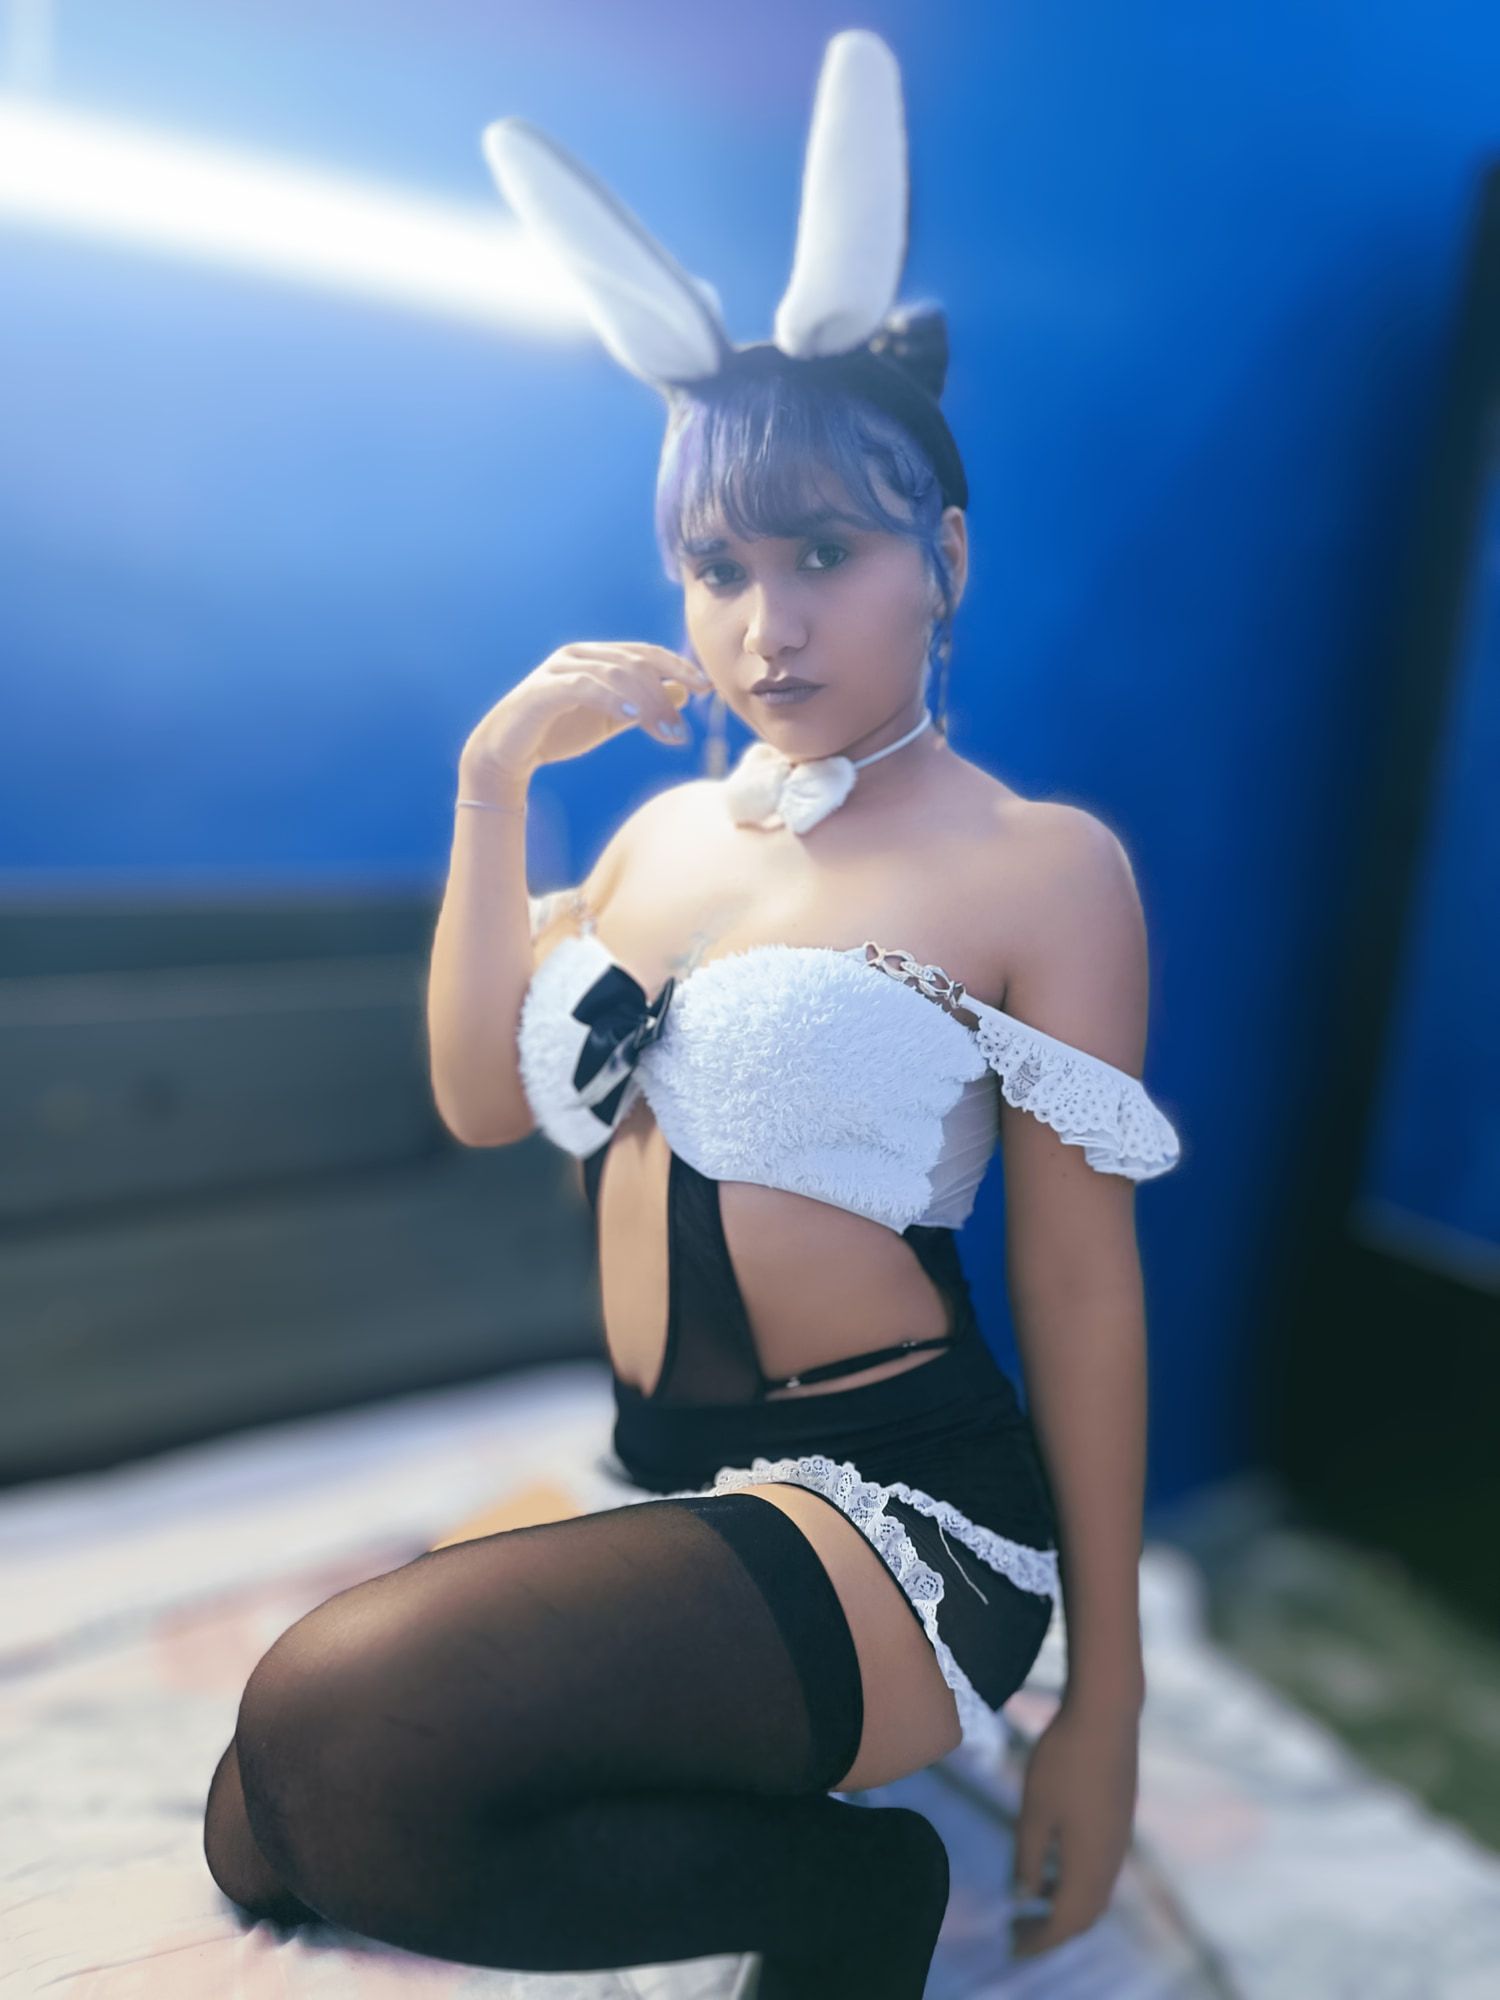 Bunny girl 🐰 #2